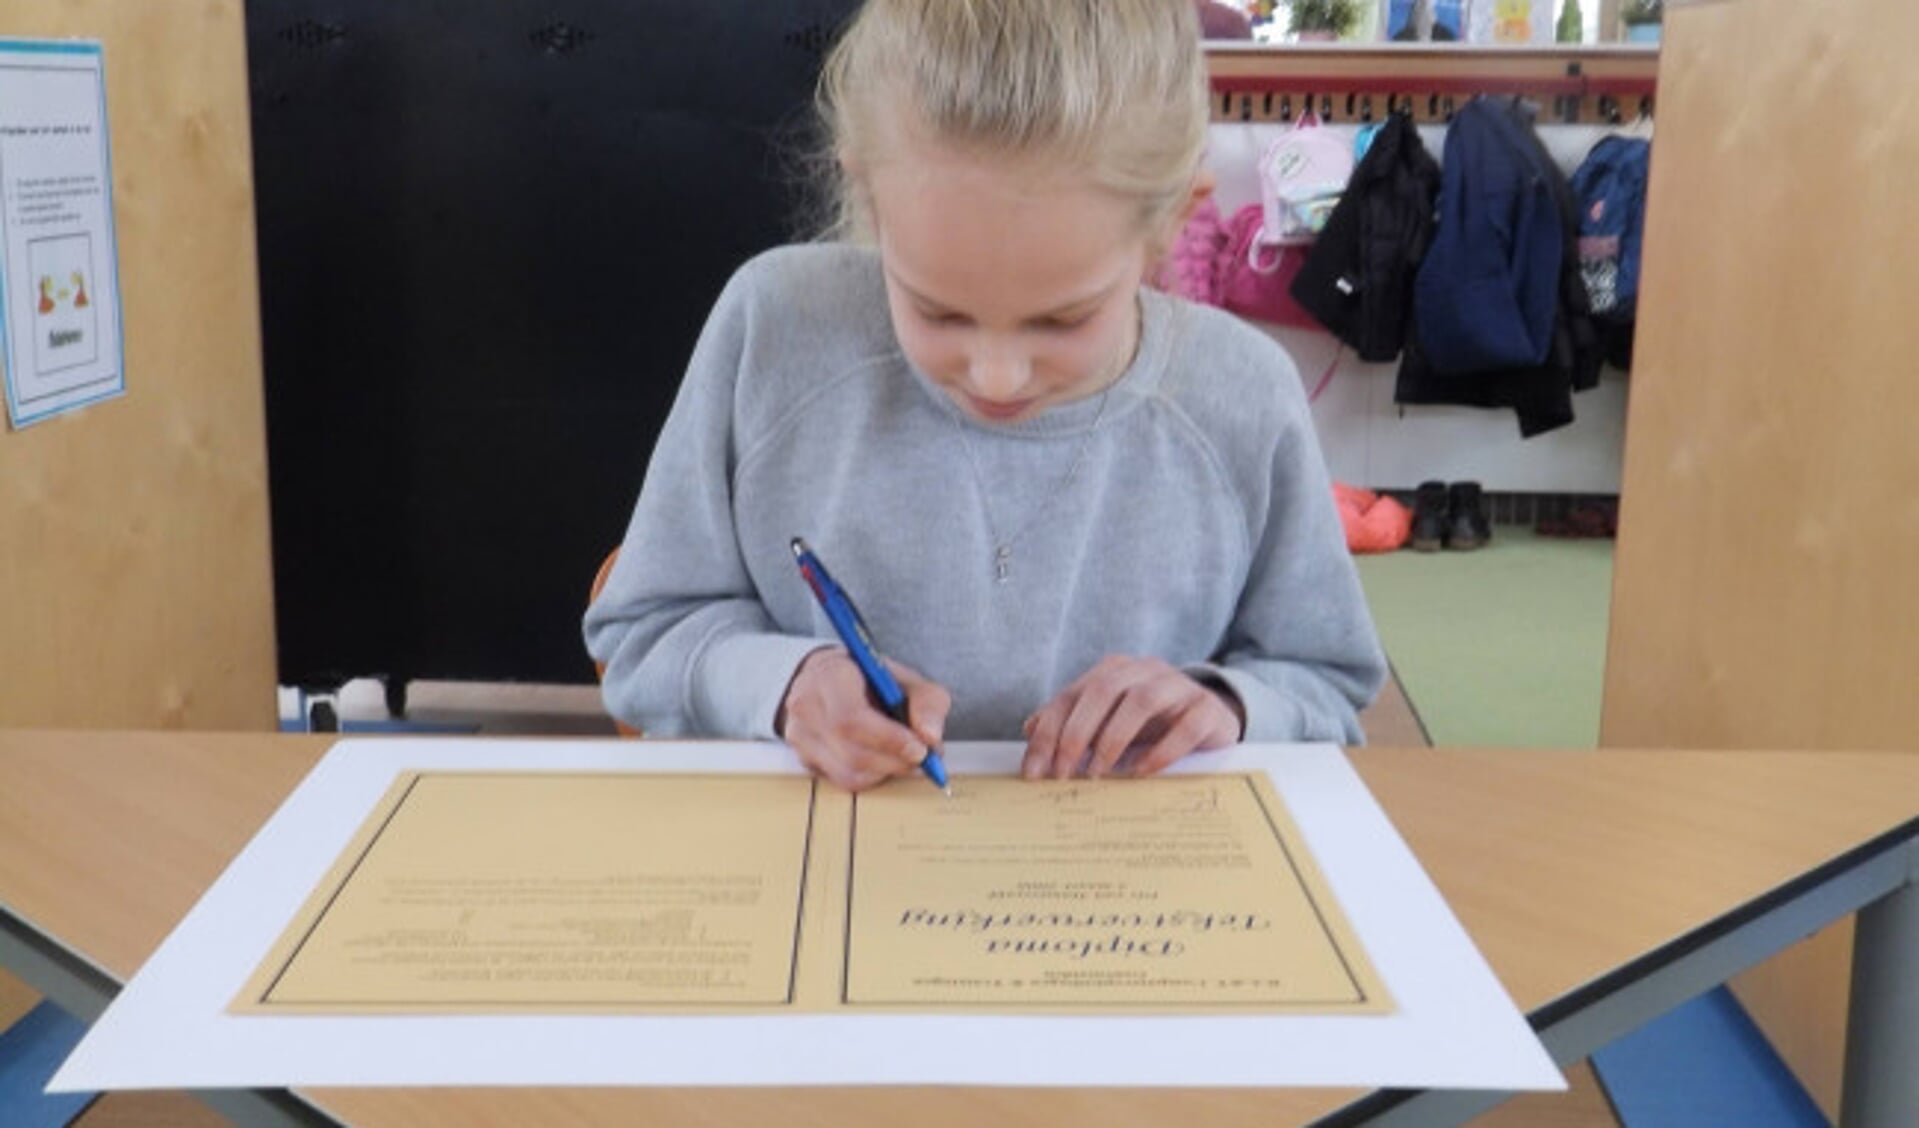  Foto: Ondertekening Gouden diploma Iris van Hamersveld Oranjeschool